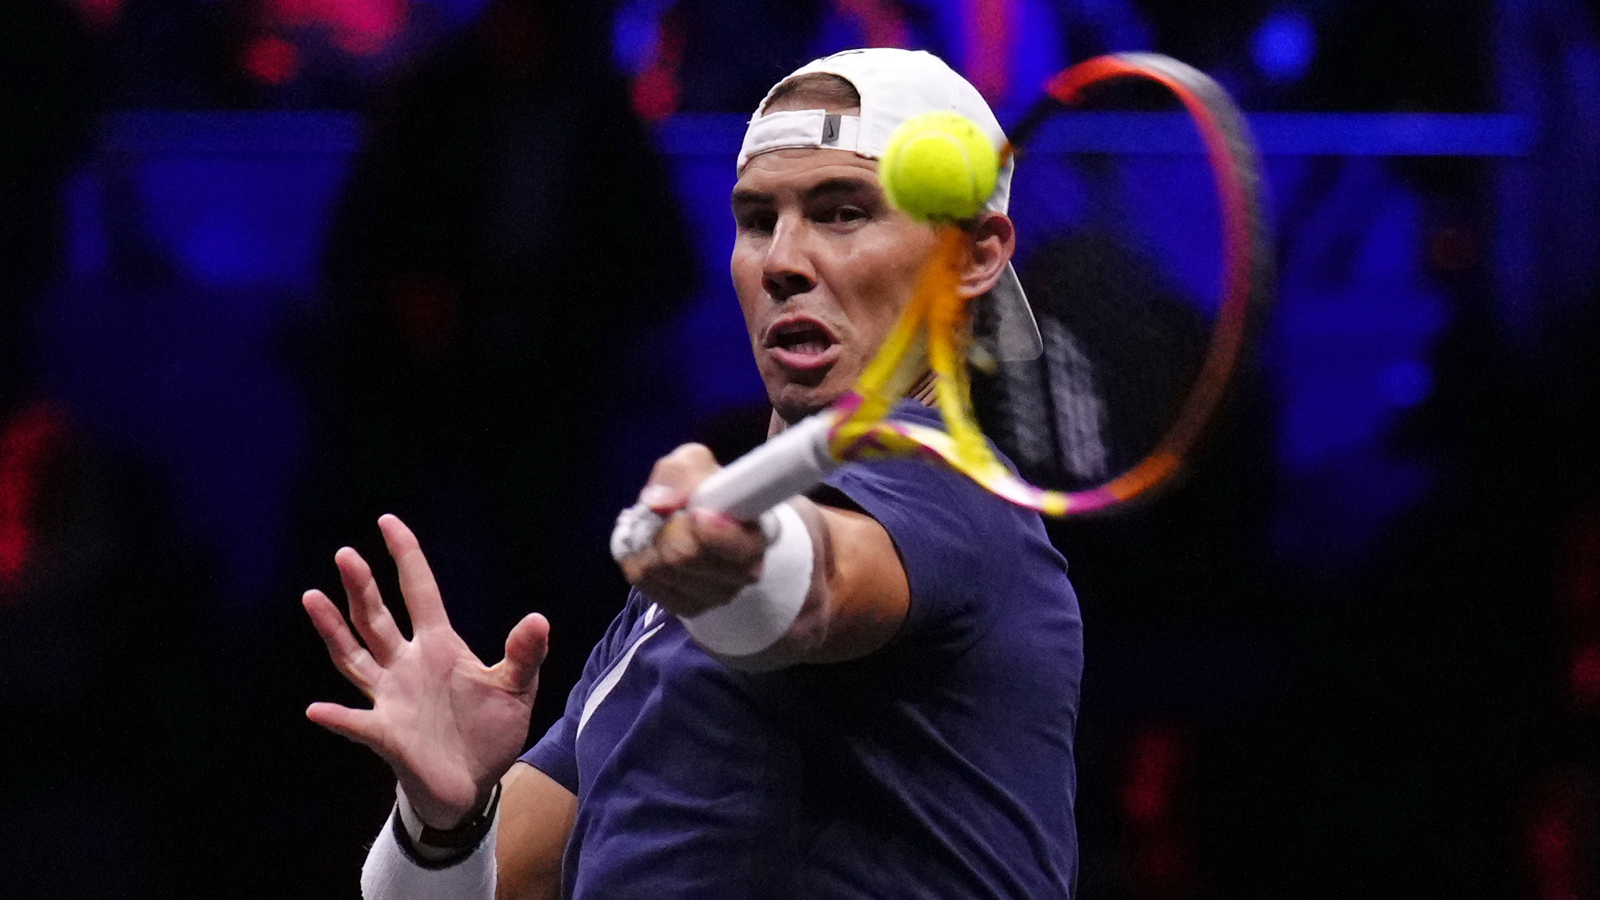 Australian Open CEO confirms Rafael Nadal’s attendance: ‘Rafa will be back’